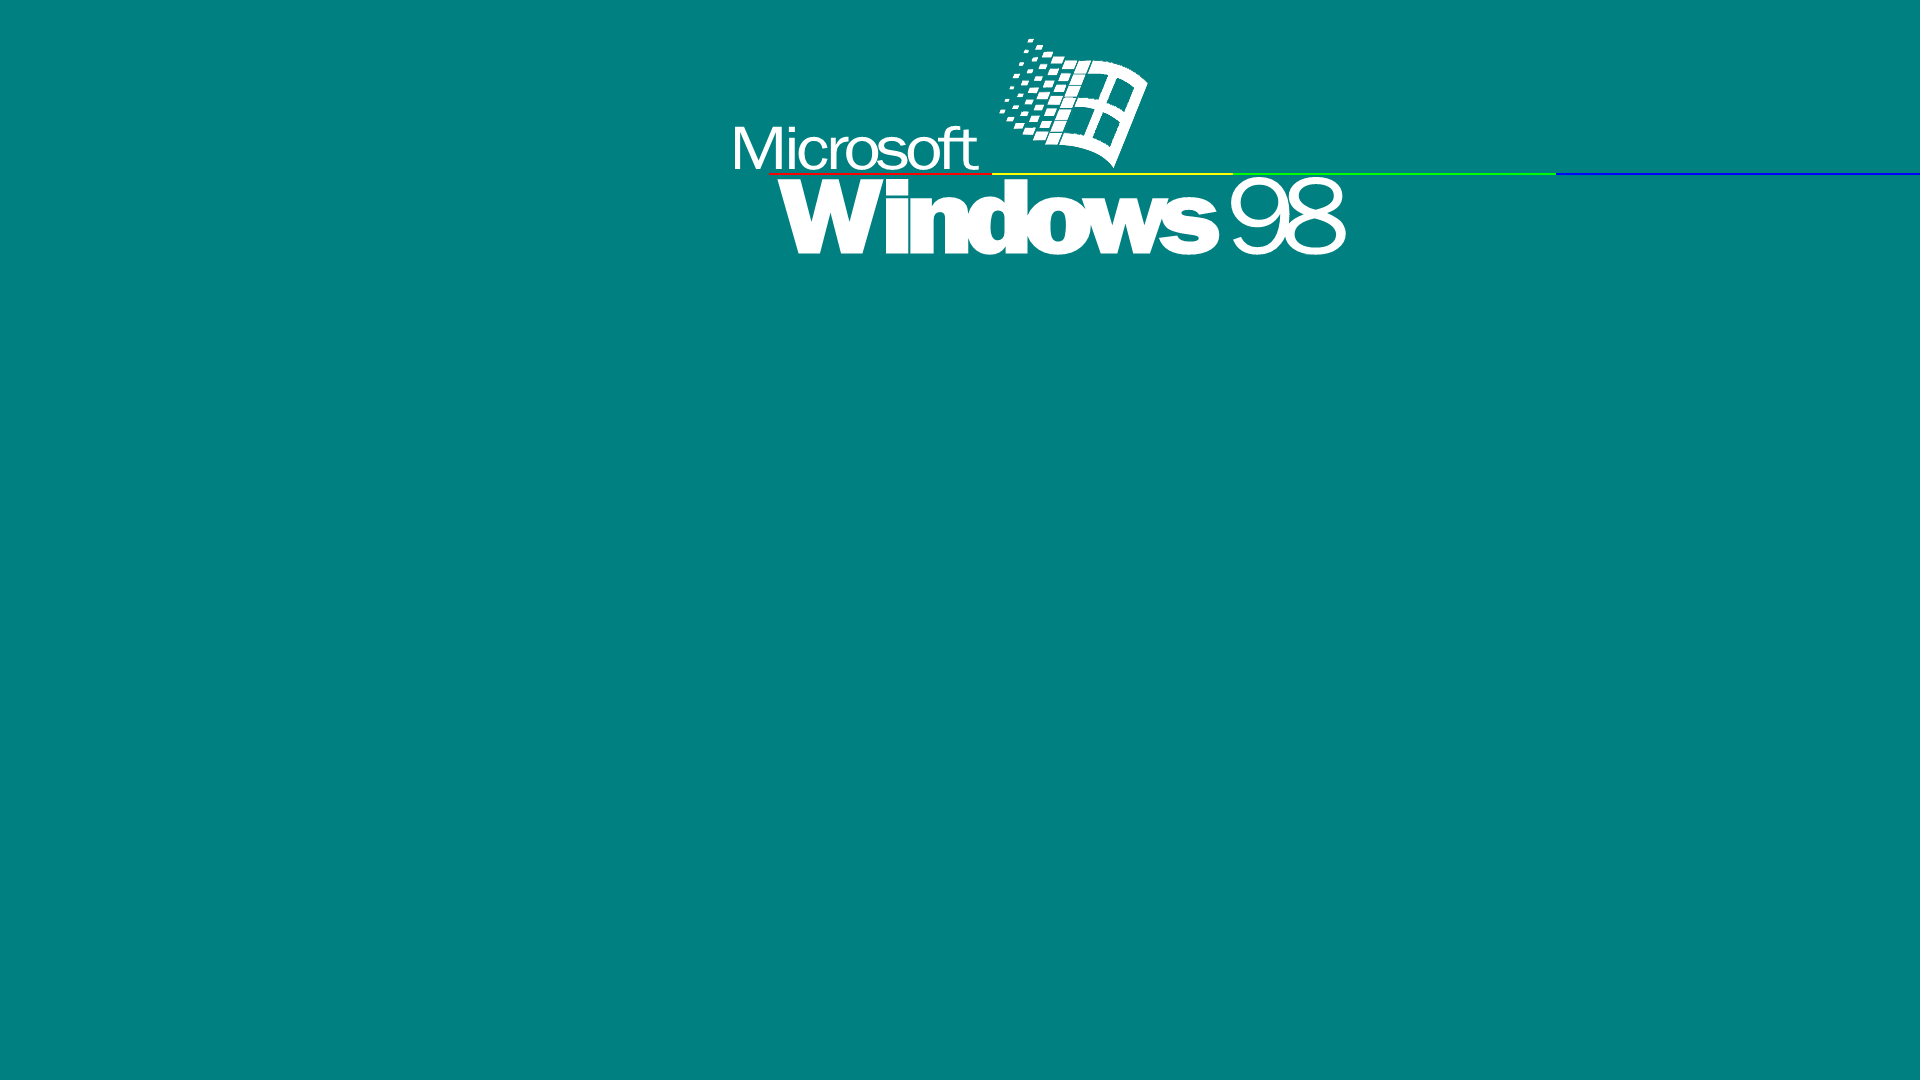 Windows 98 Retro Wallpaper by Axeldragani on